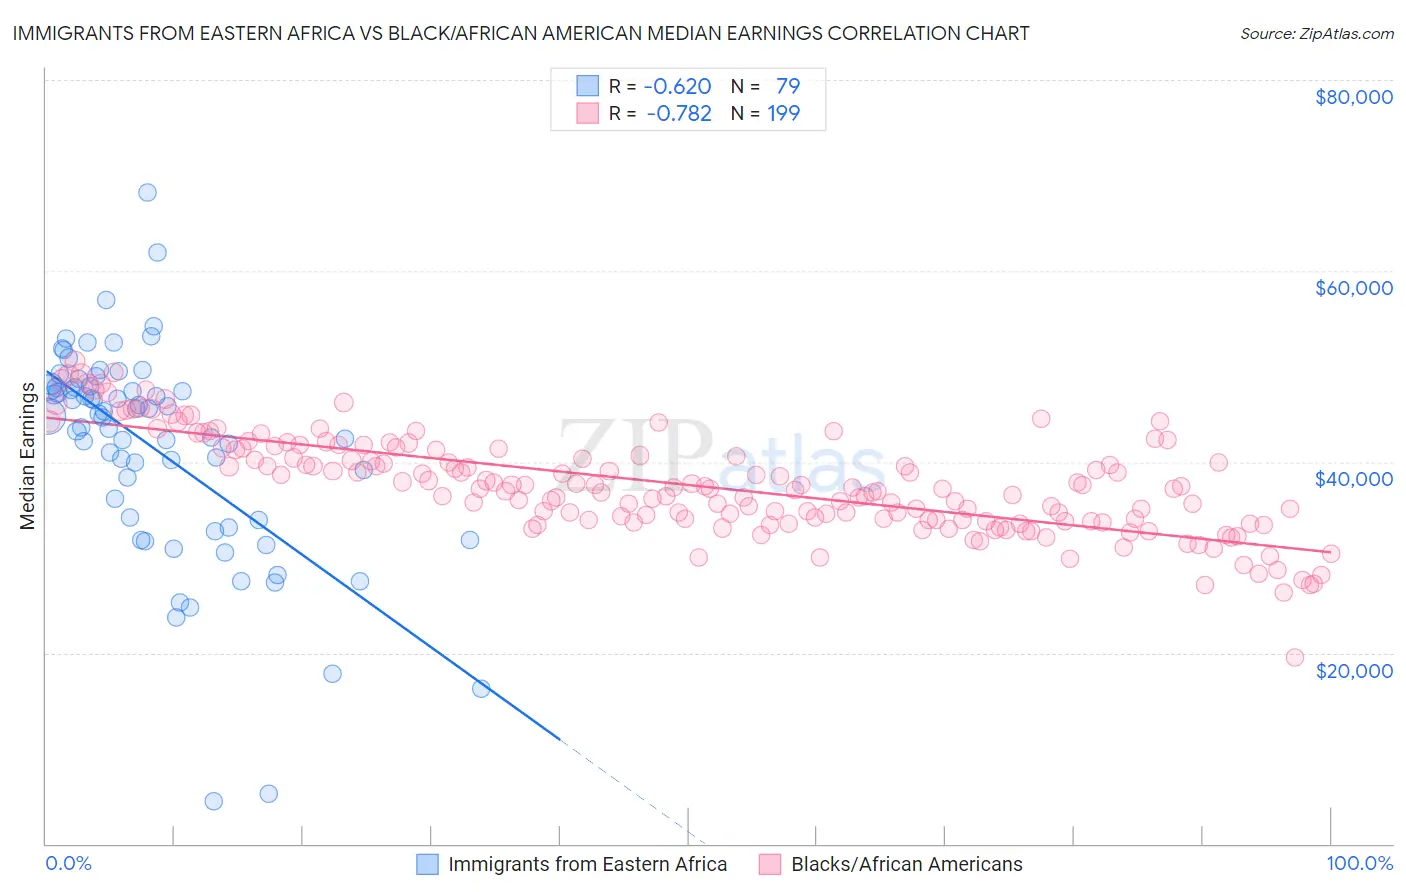 Immigrants from Eastern Africa vs Black/African American Median Earnings